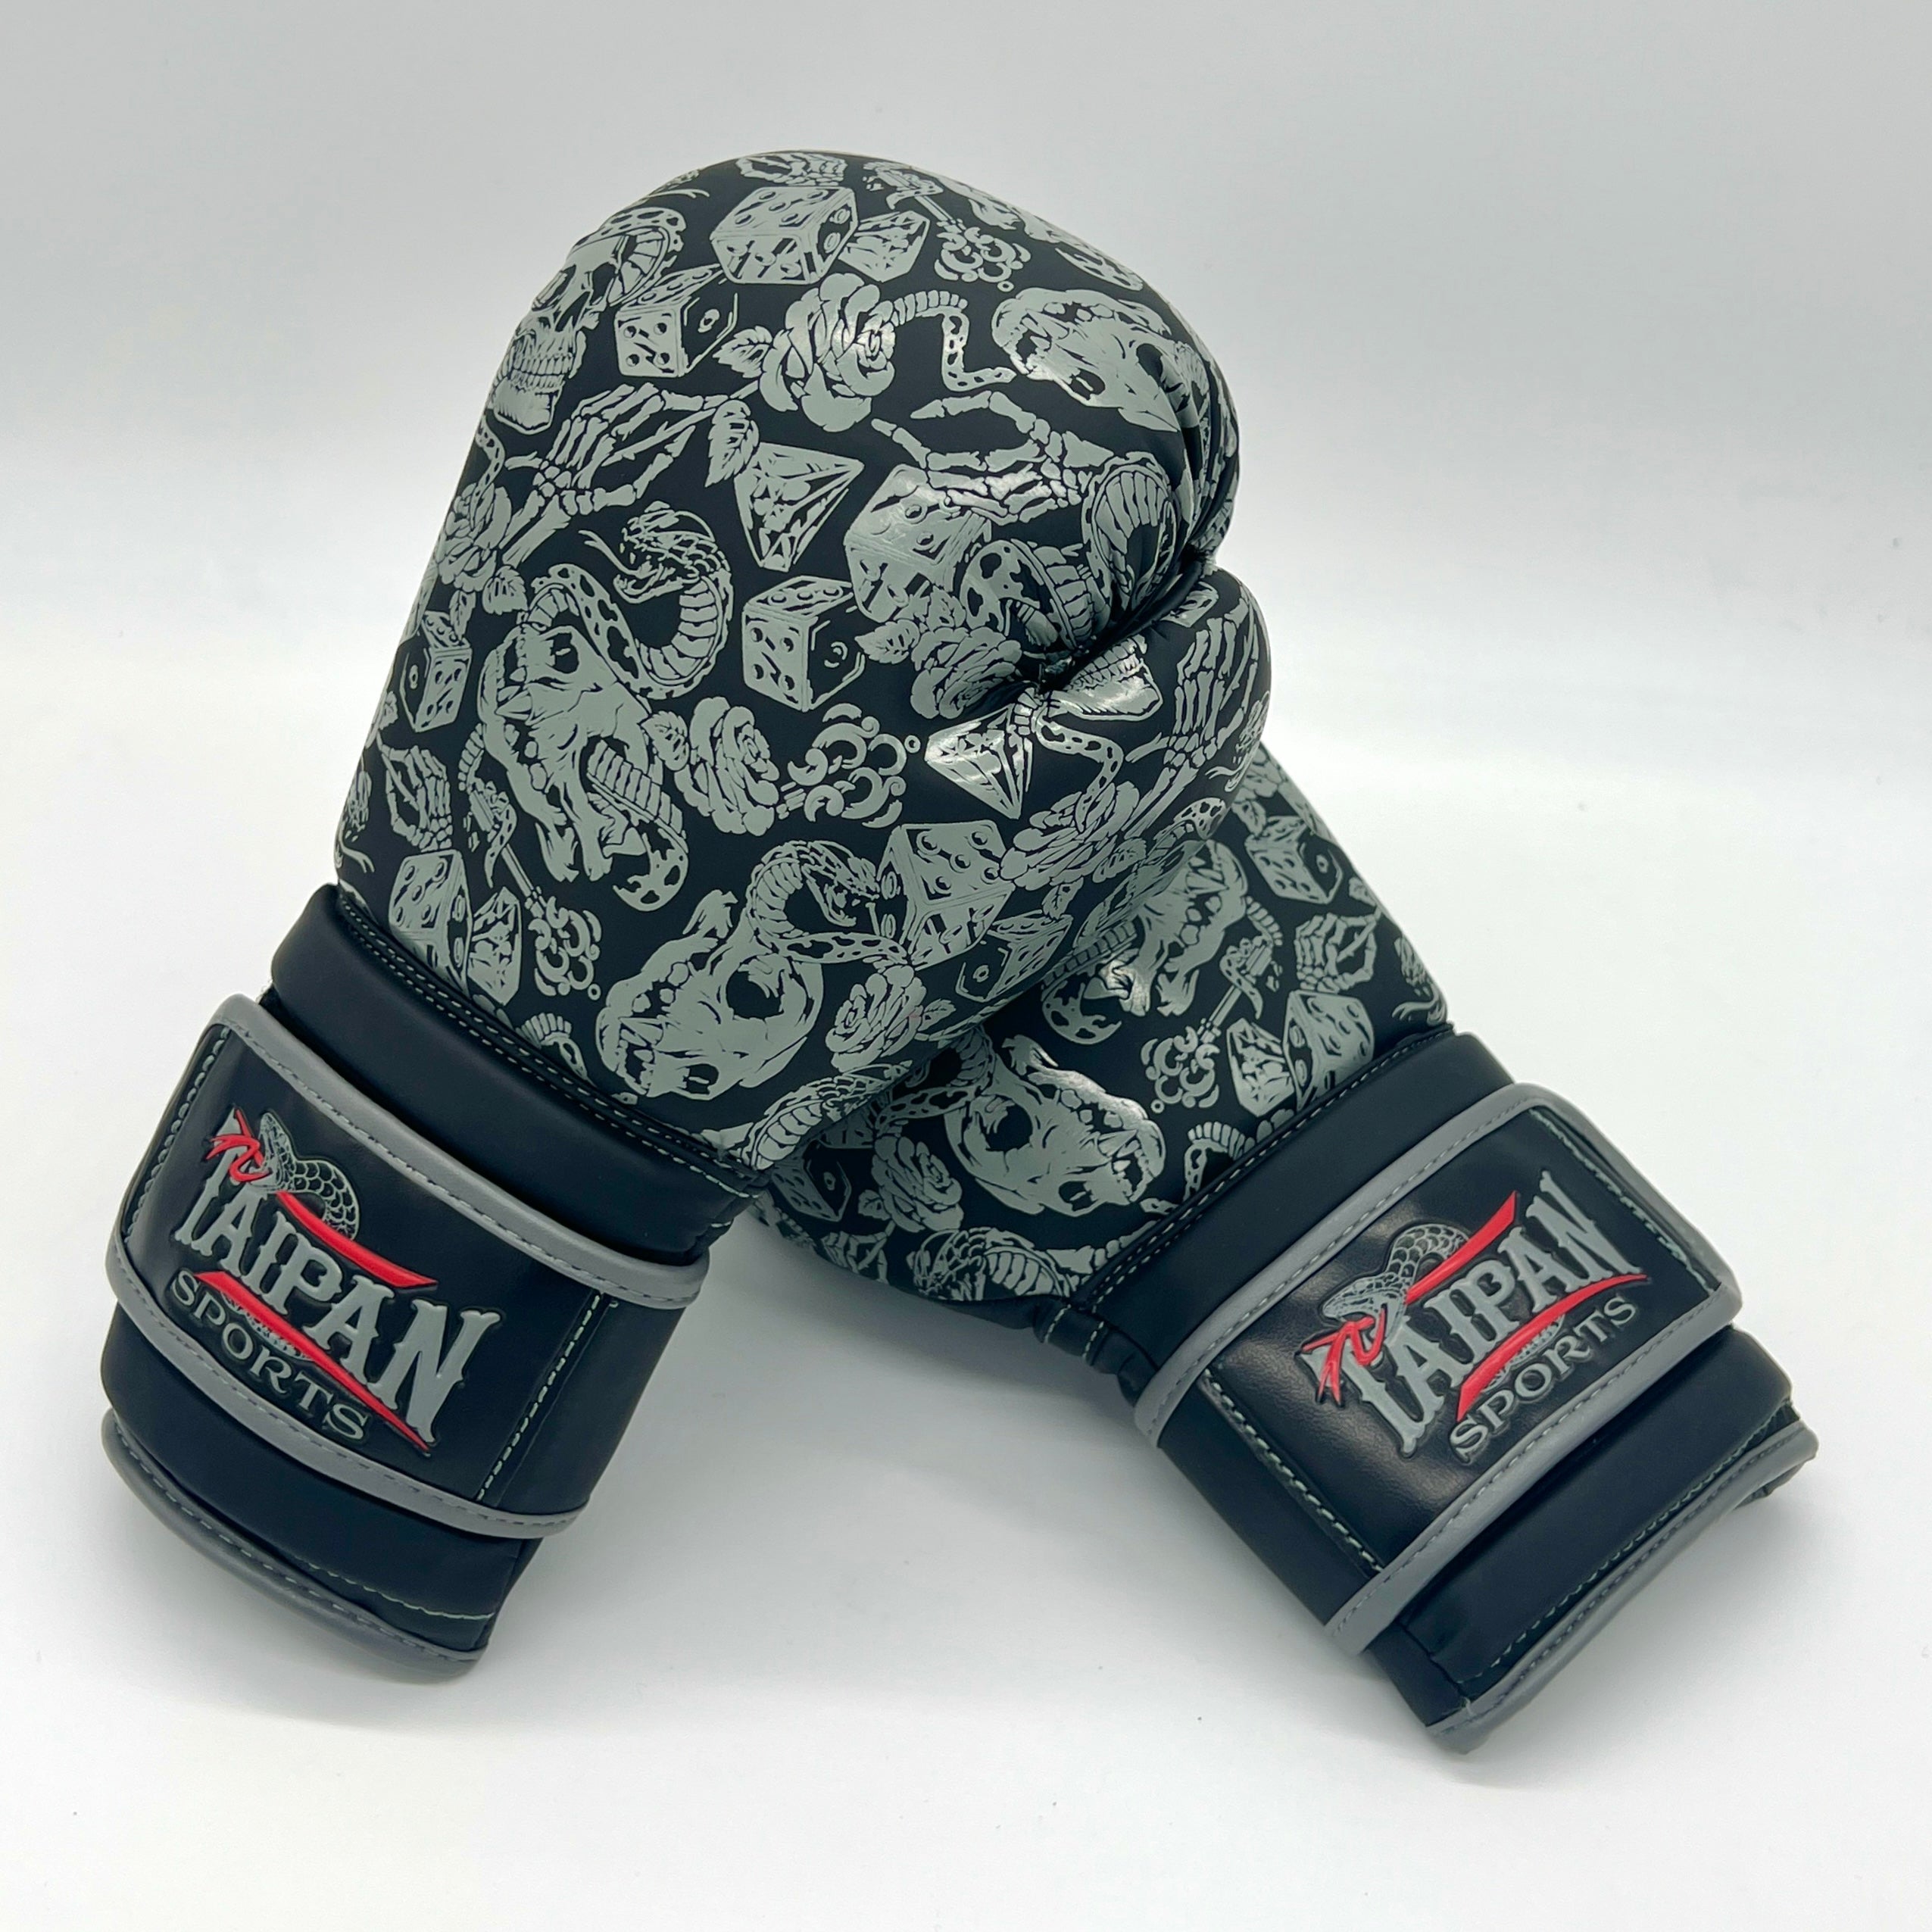 Grey Cobra Strike Boxing Gloves - Taipan Sports